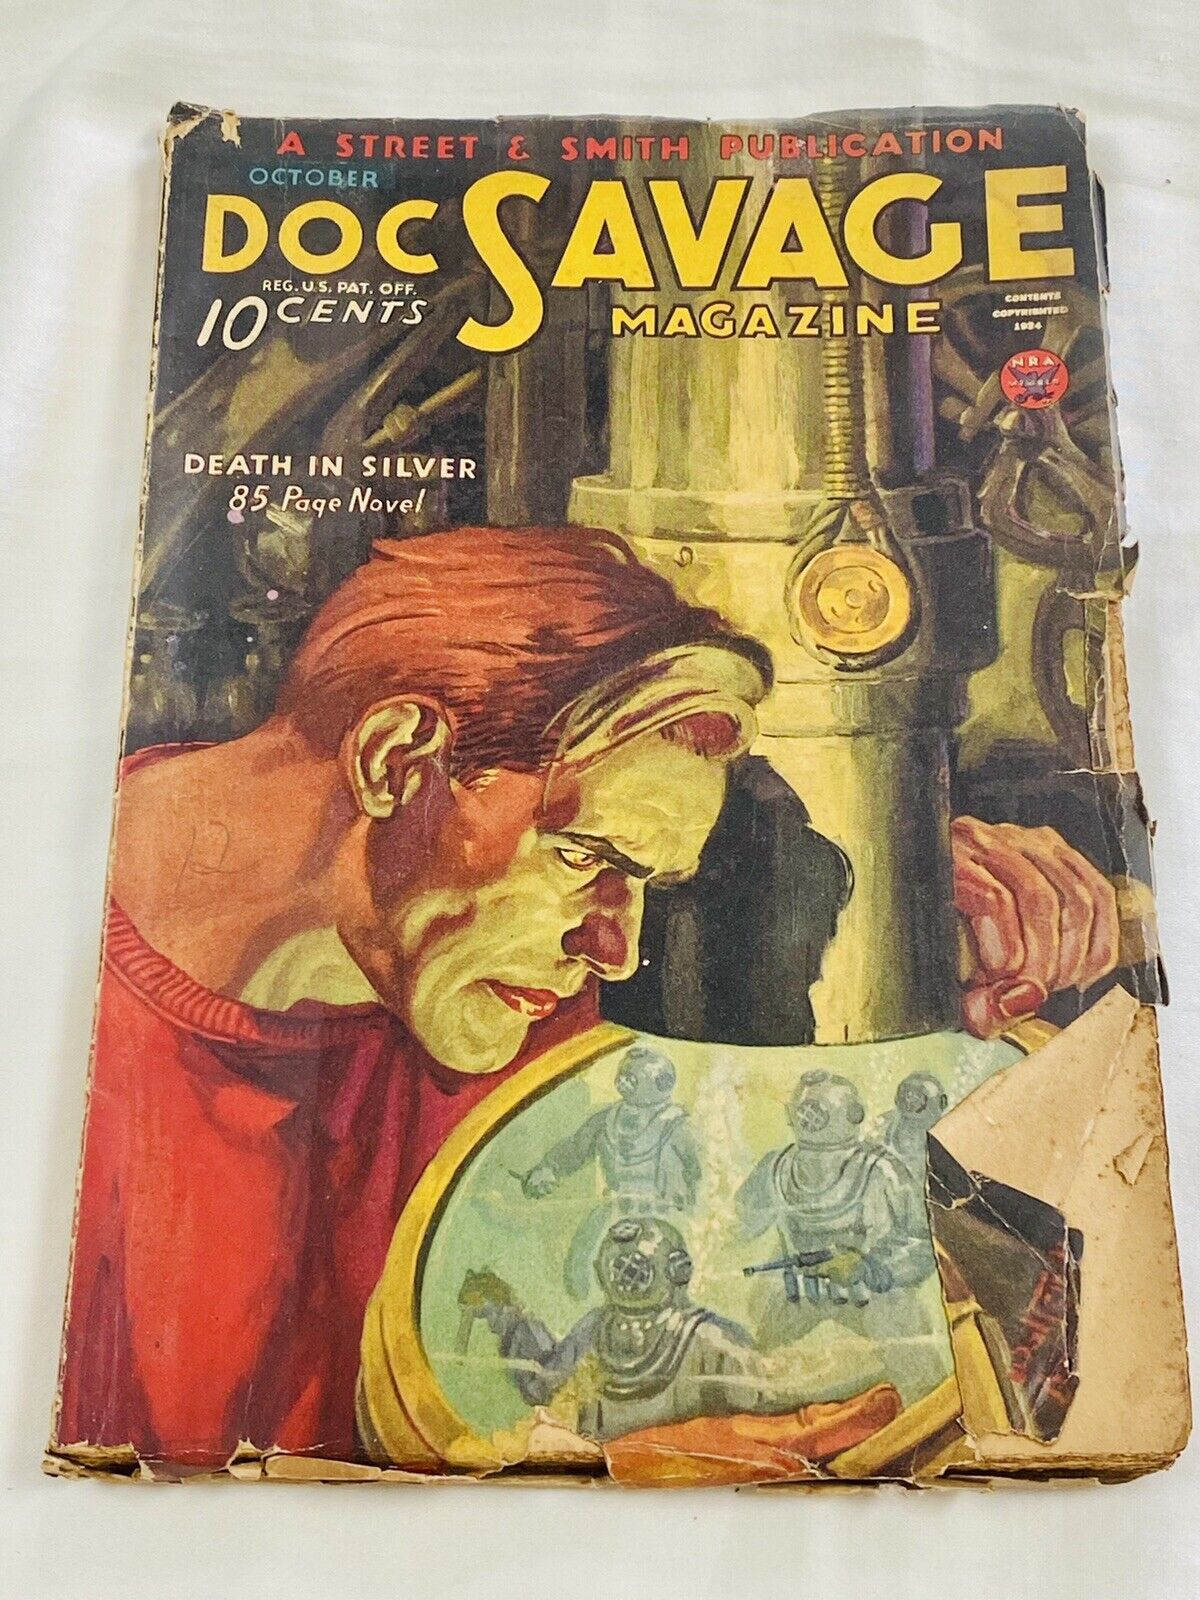 Original Doc Savage October 1934 Pulp Magazine “Death In Silver” Volume 4 #2